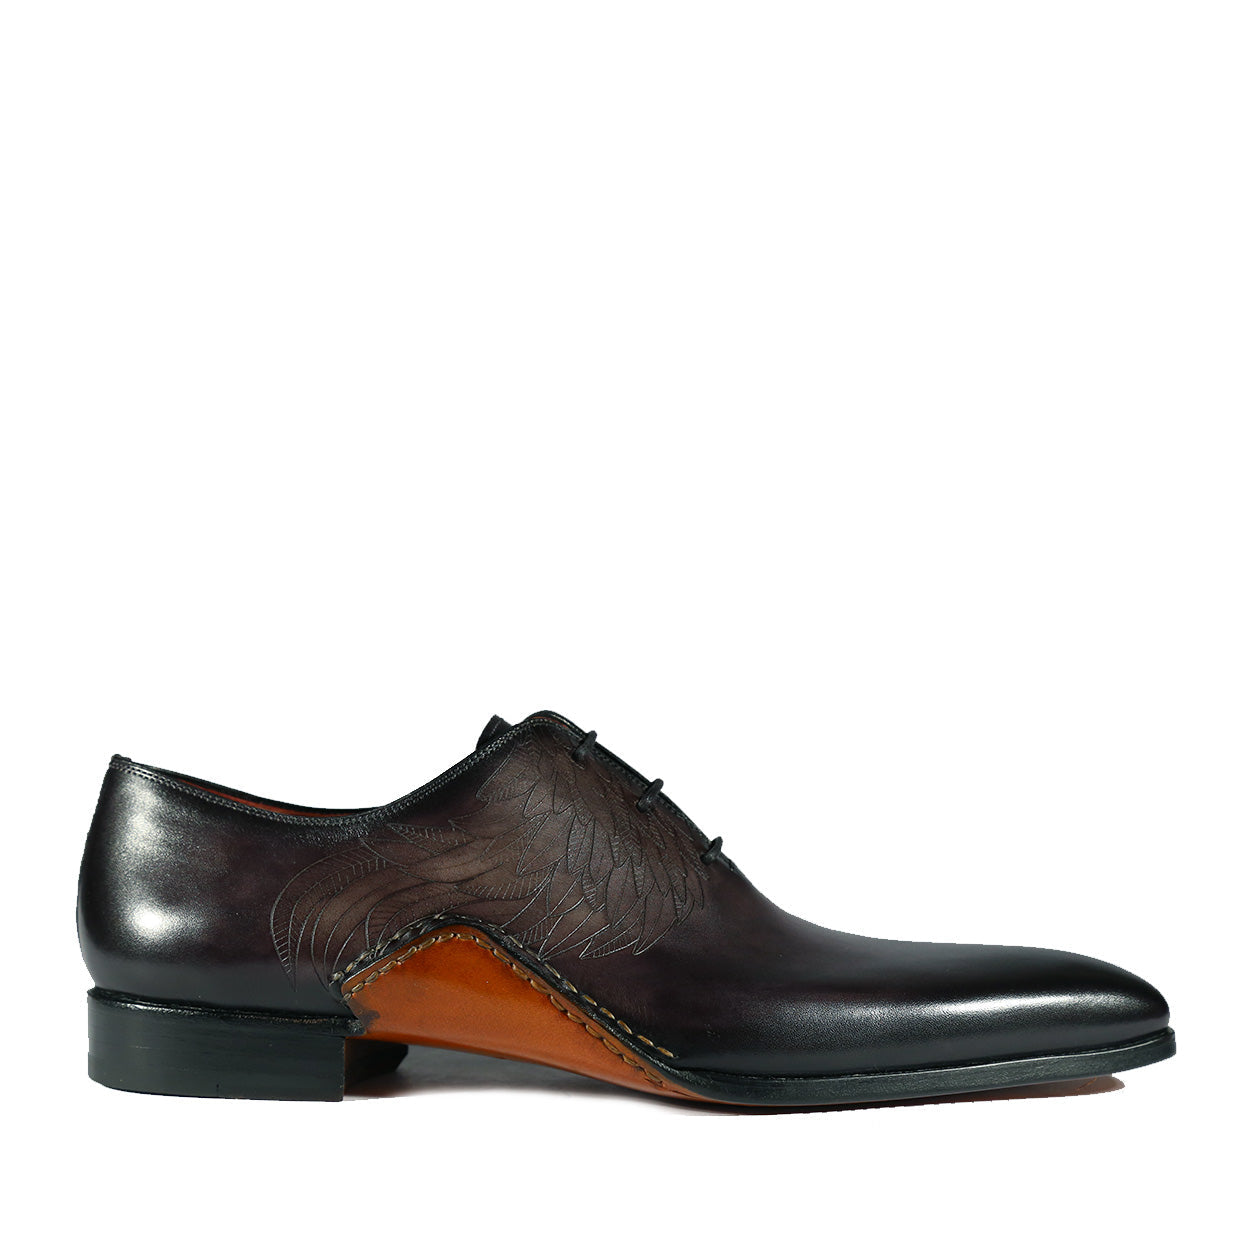 Magnanni 24133 Men's Shoes Black & Gray Patina Leather Whole-cut Oxfor ...